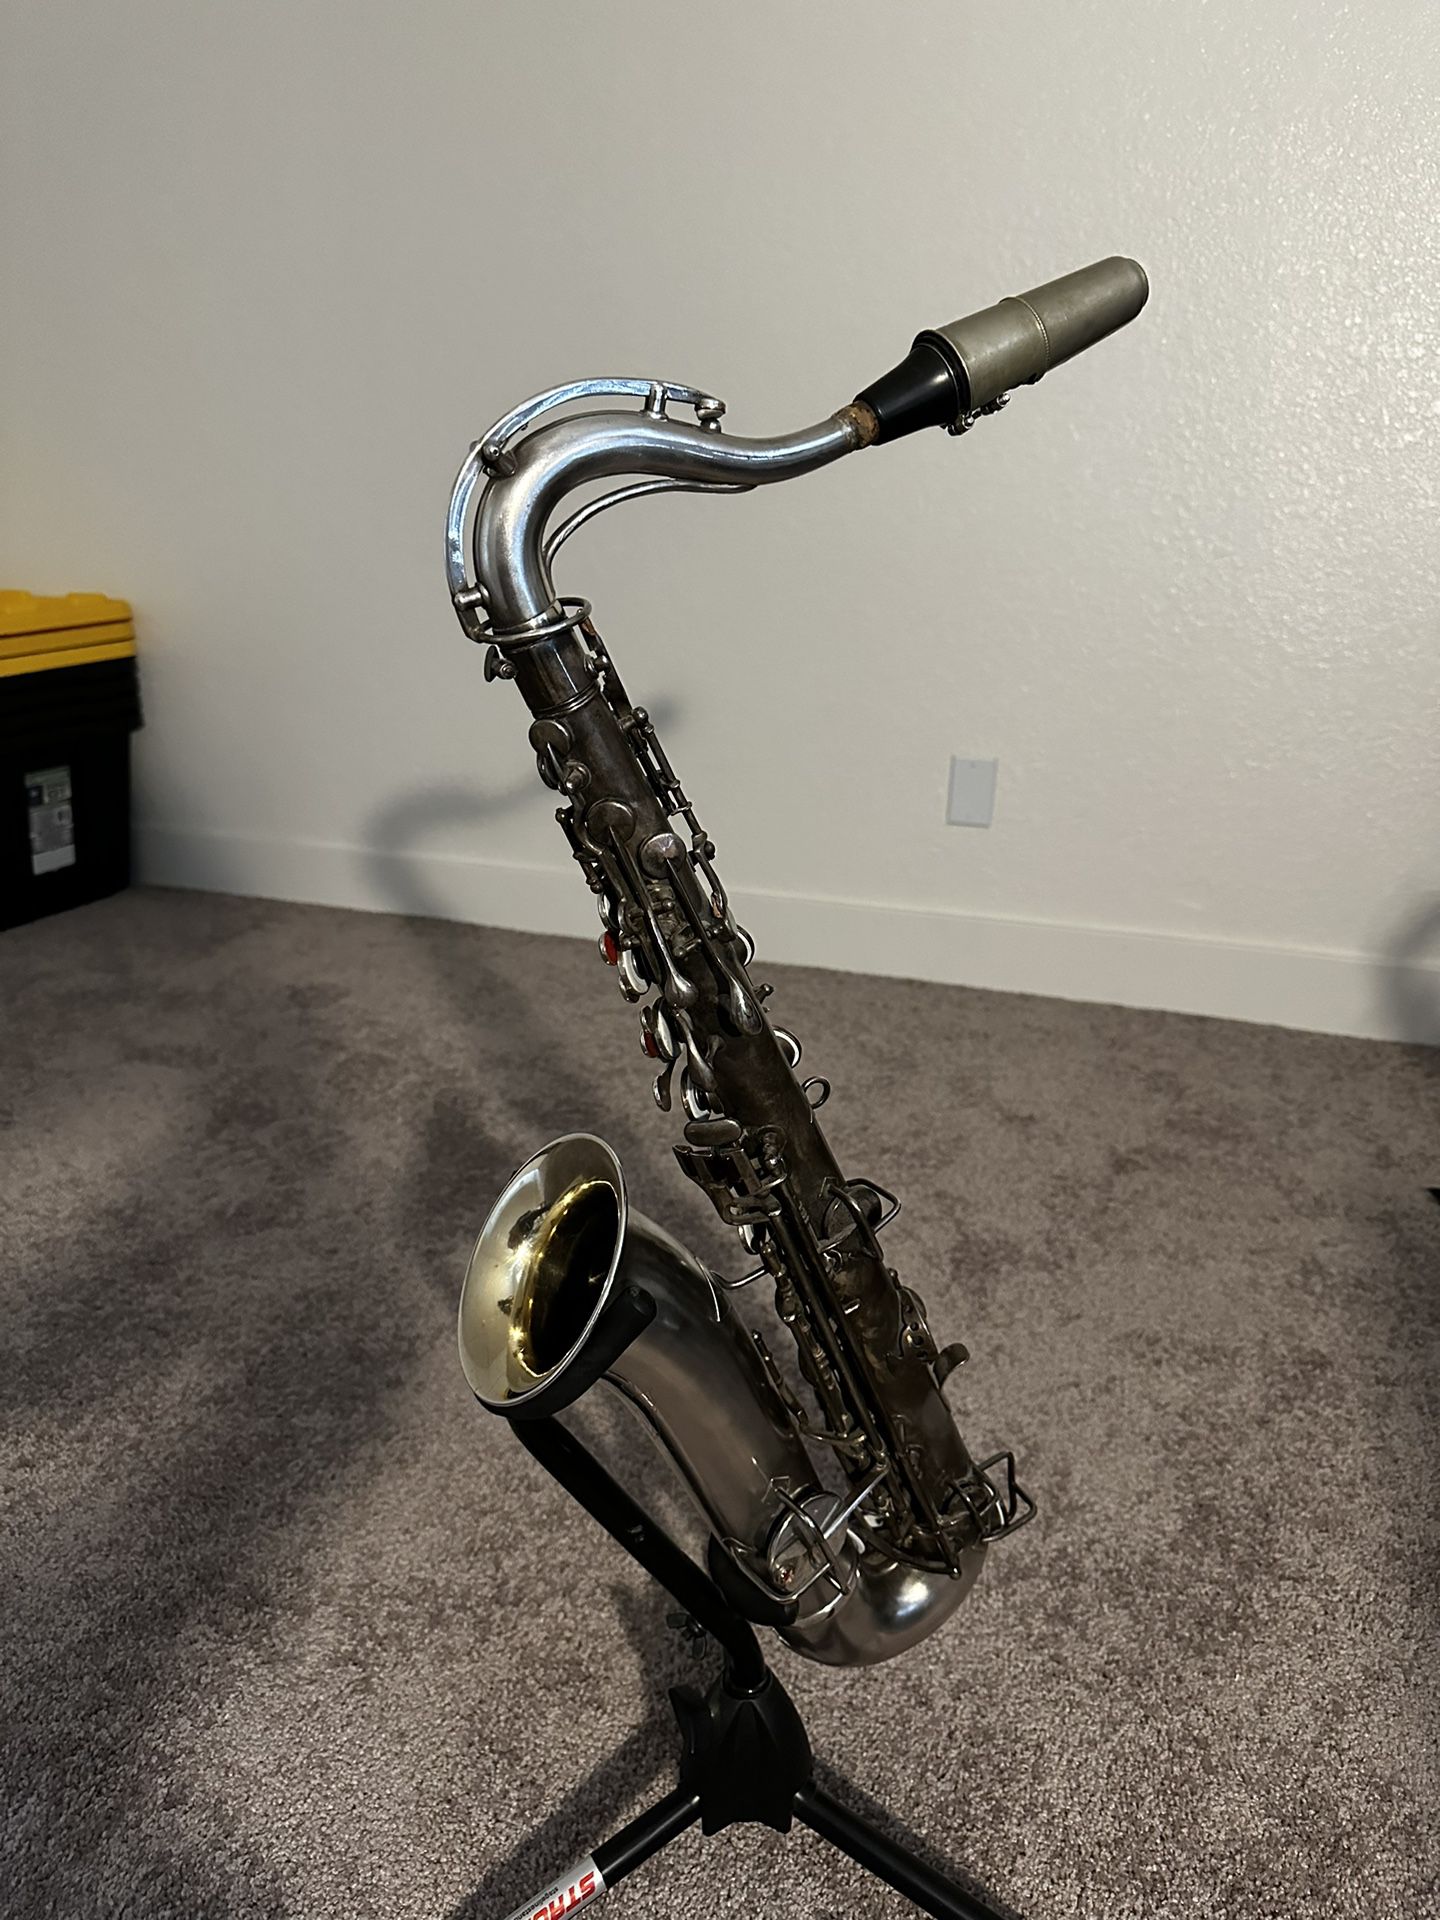 C Melody Saxophone